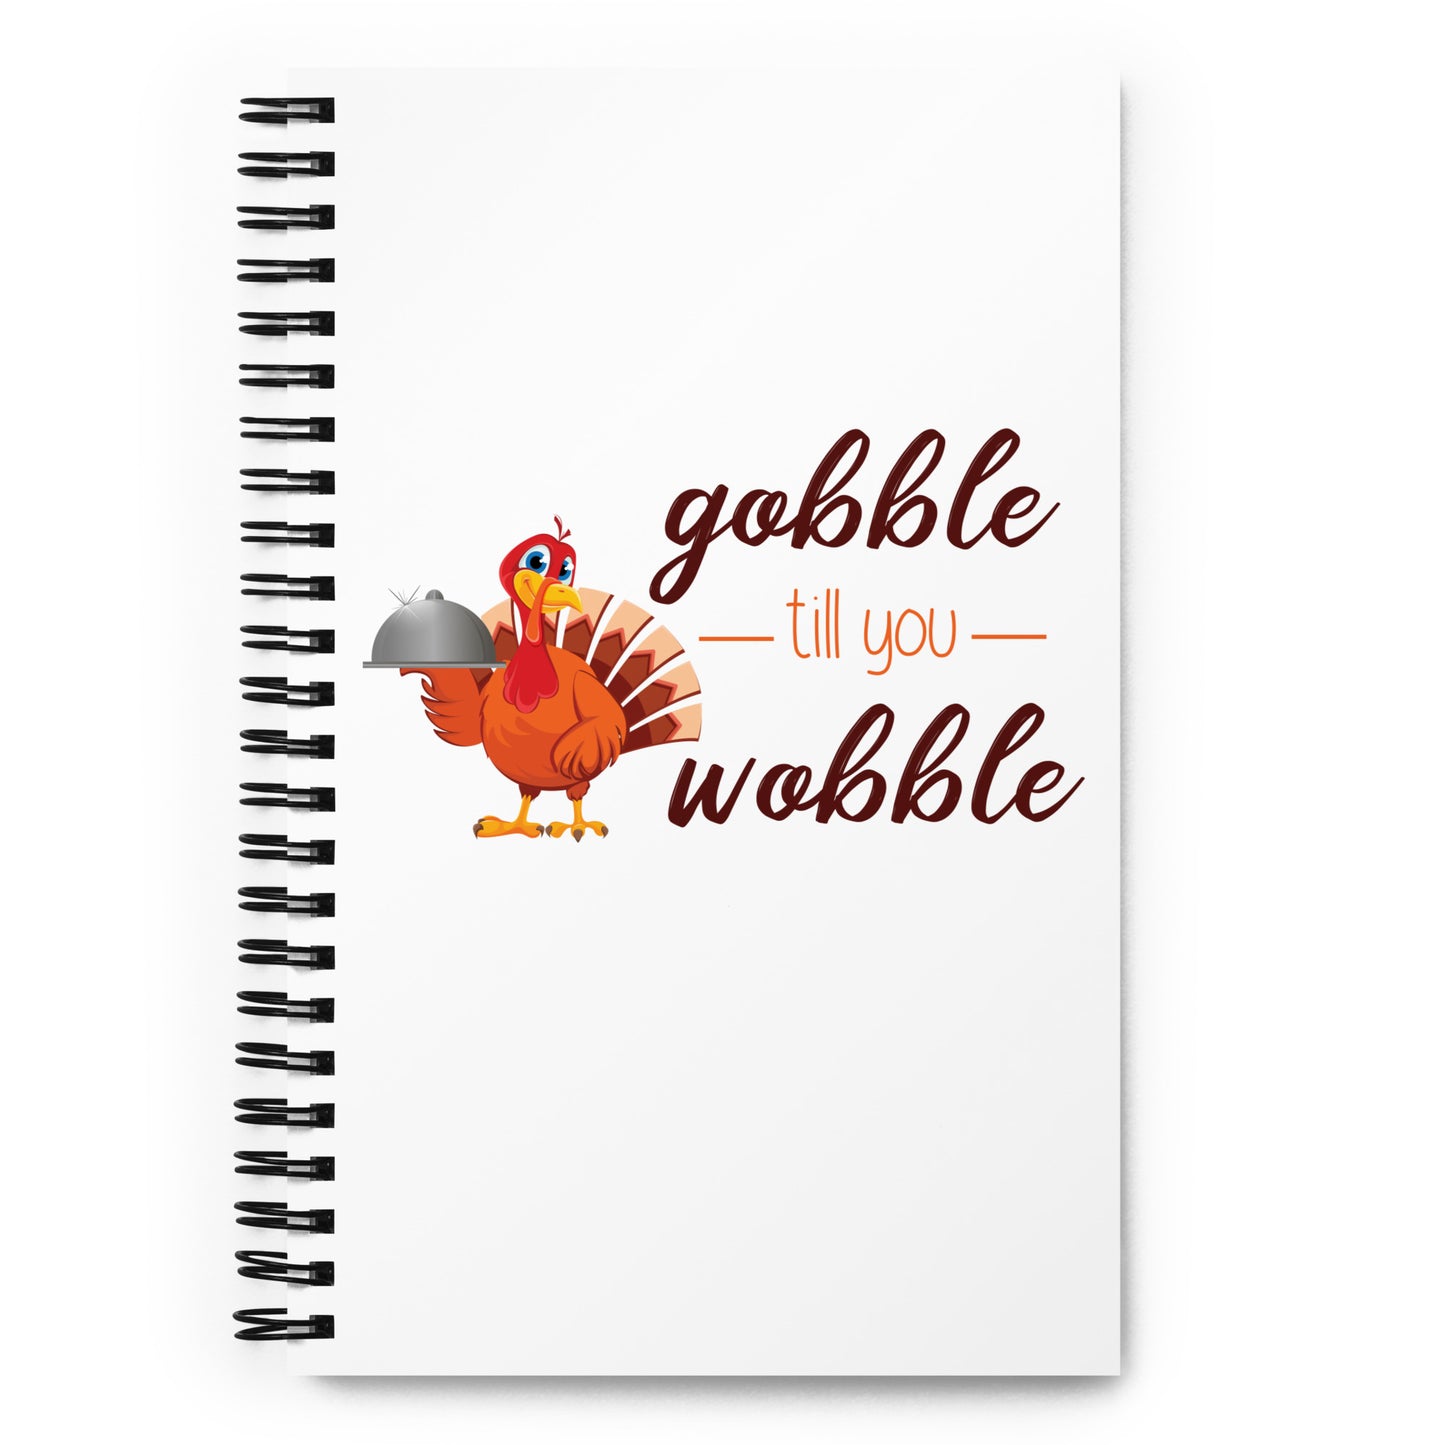 Gobble til you Wobble Spiral notebook